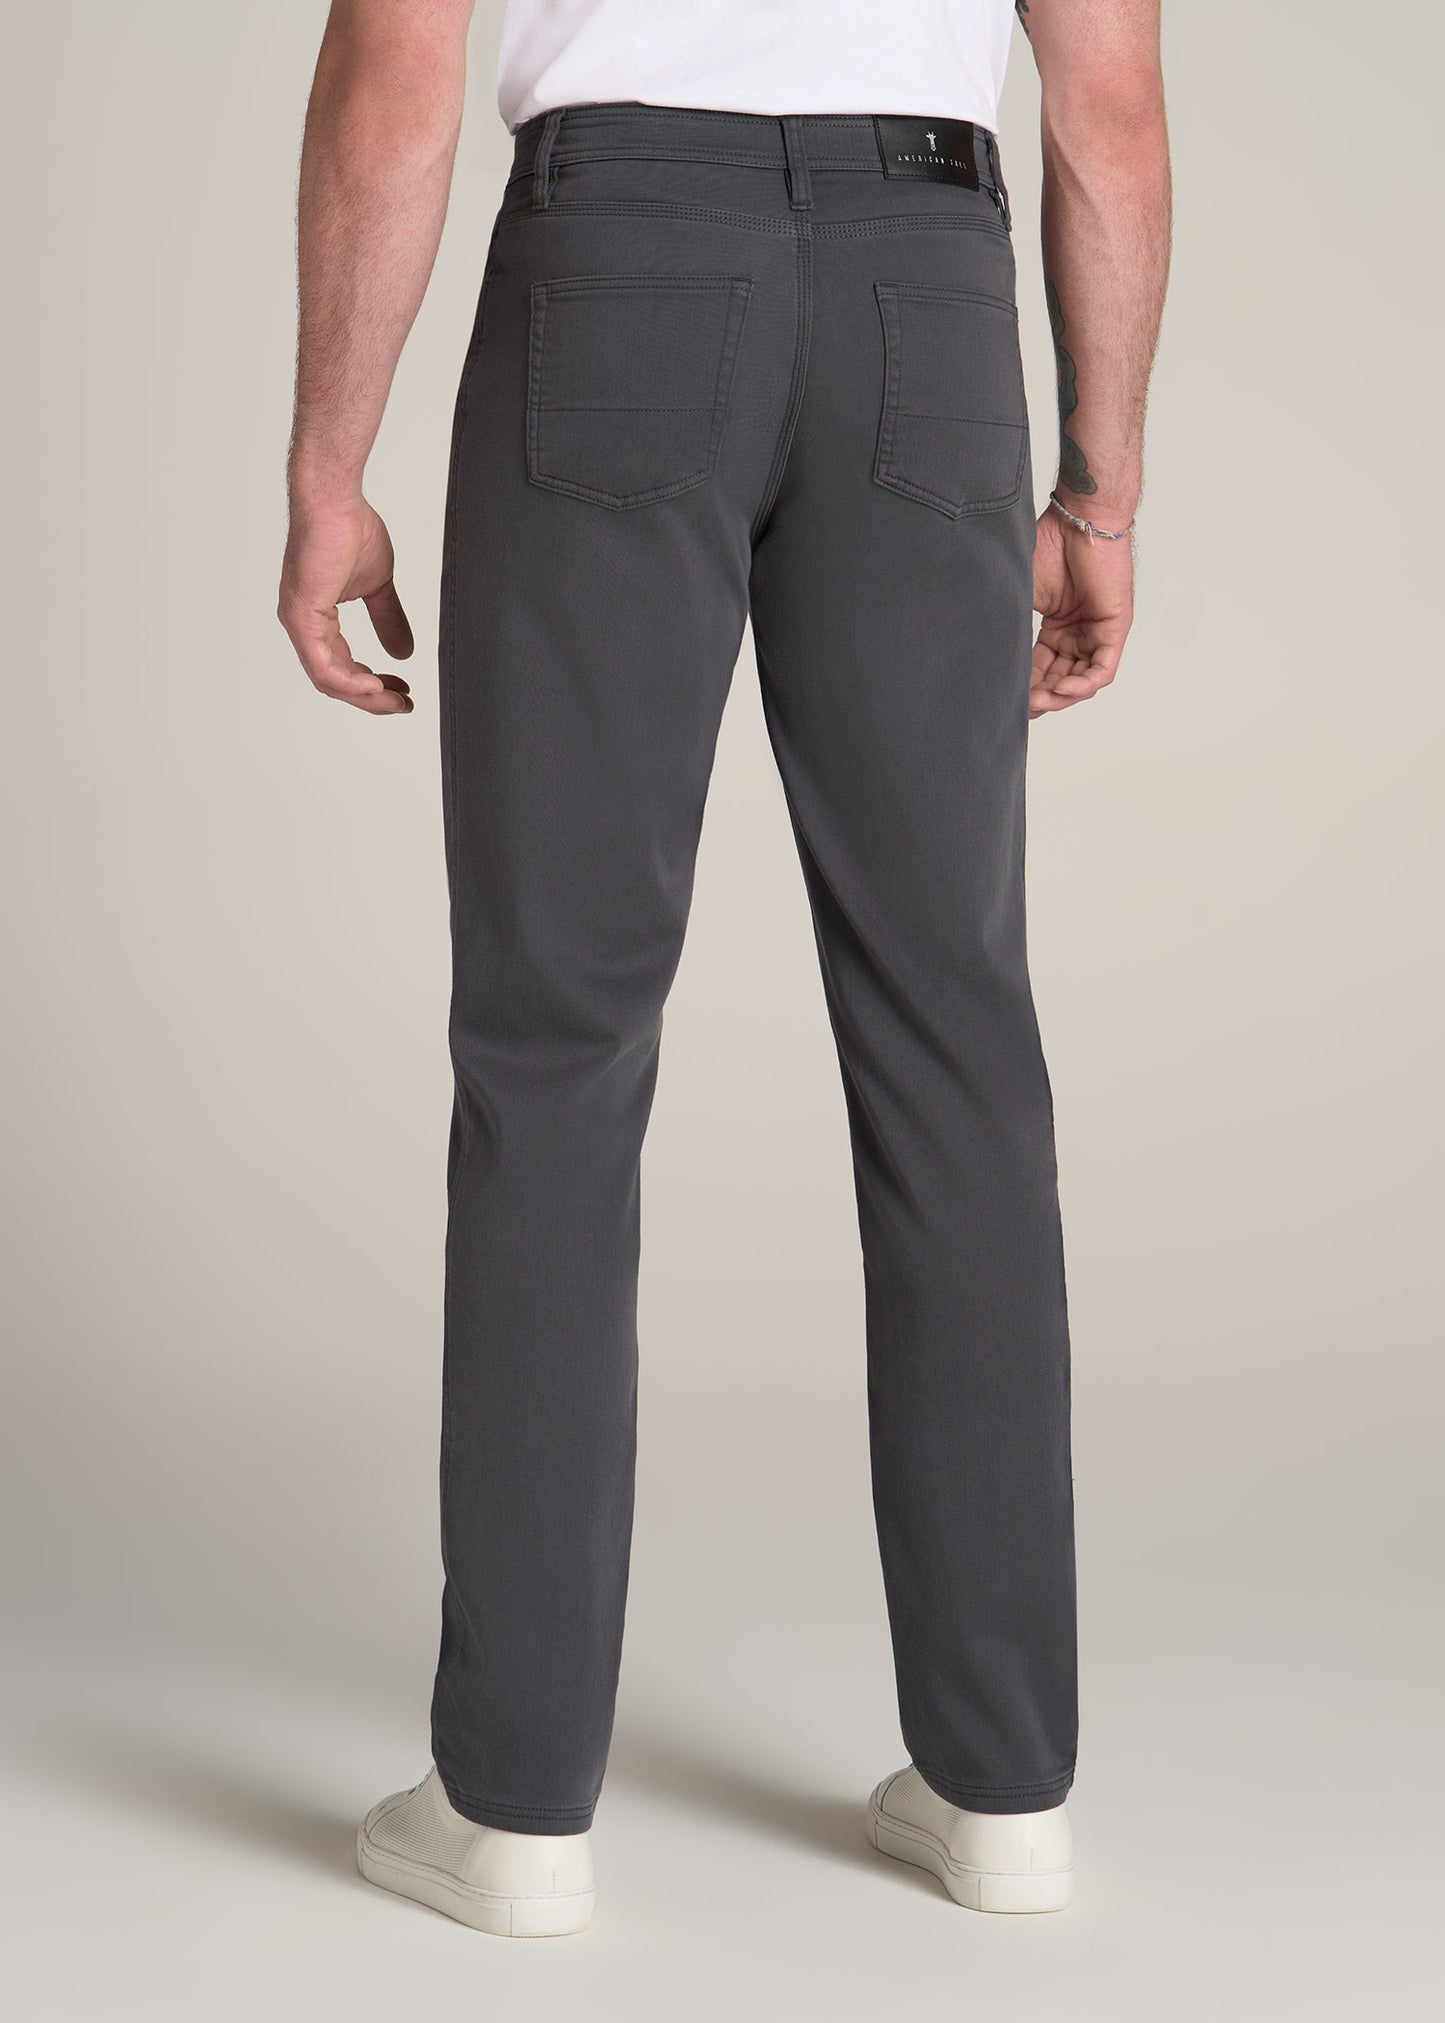 American-Tall-Men-Everyday-Comfort-Five-Pocket-Pant-Iron-Grey-back